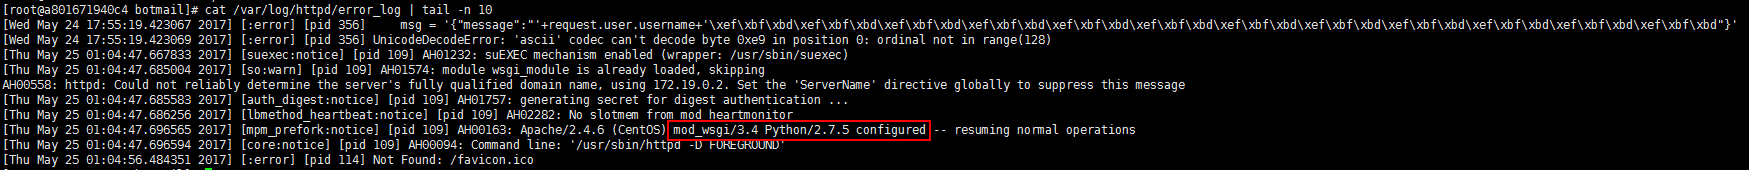 python_2.7.5_configure